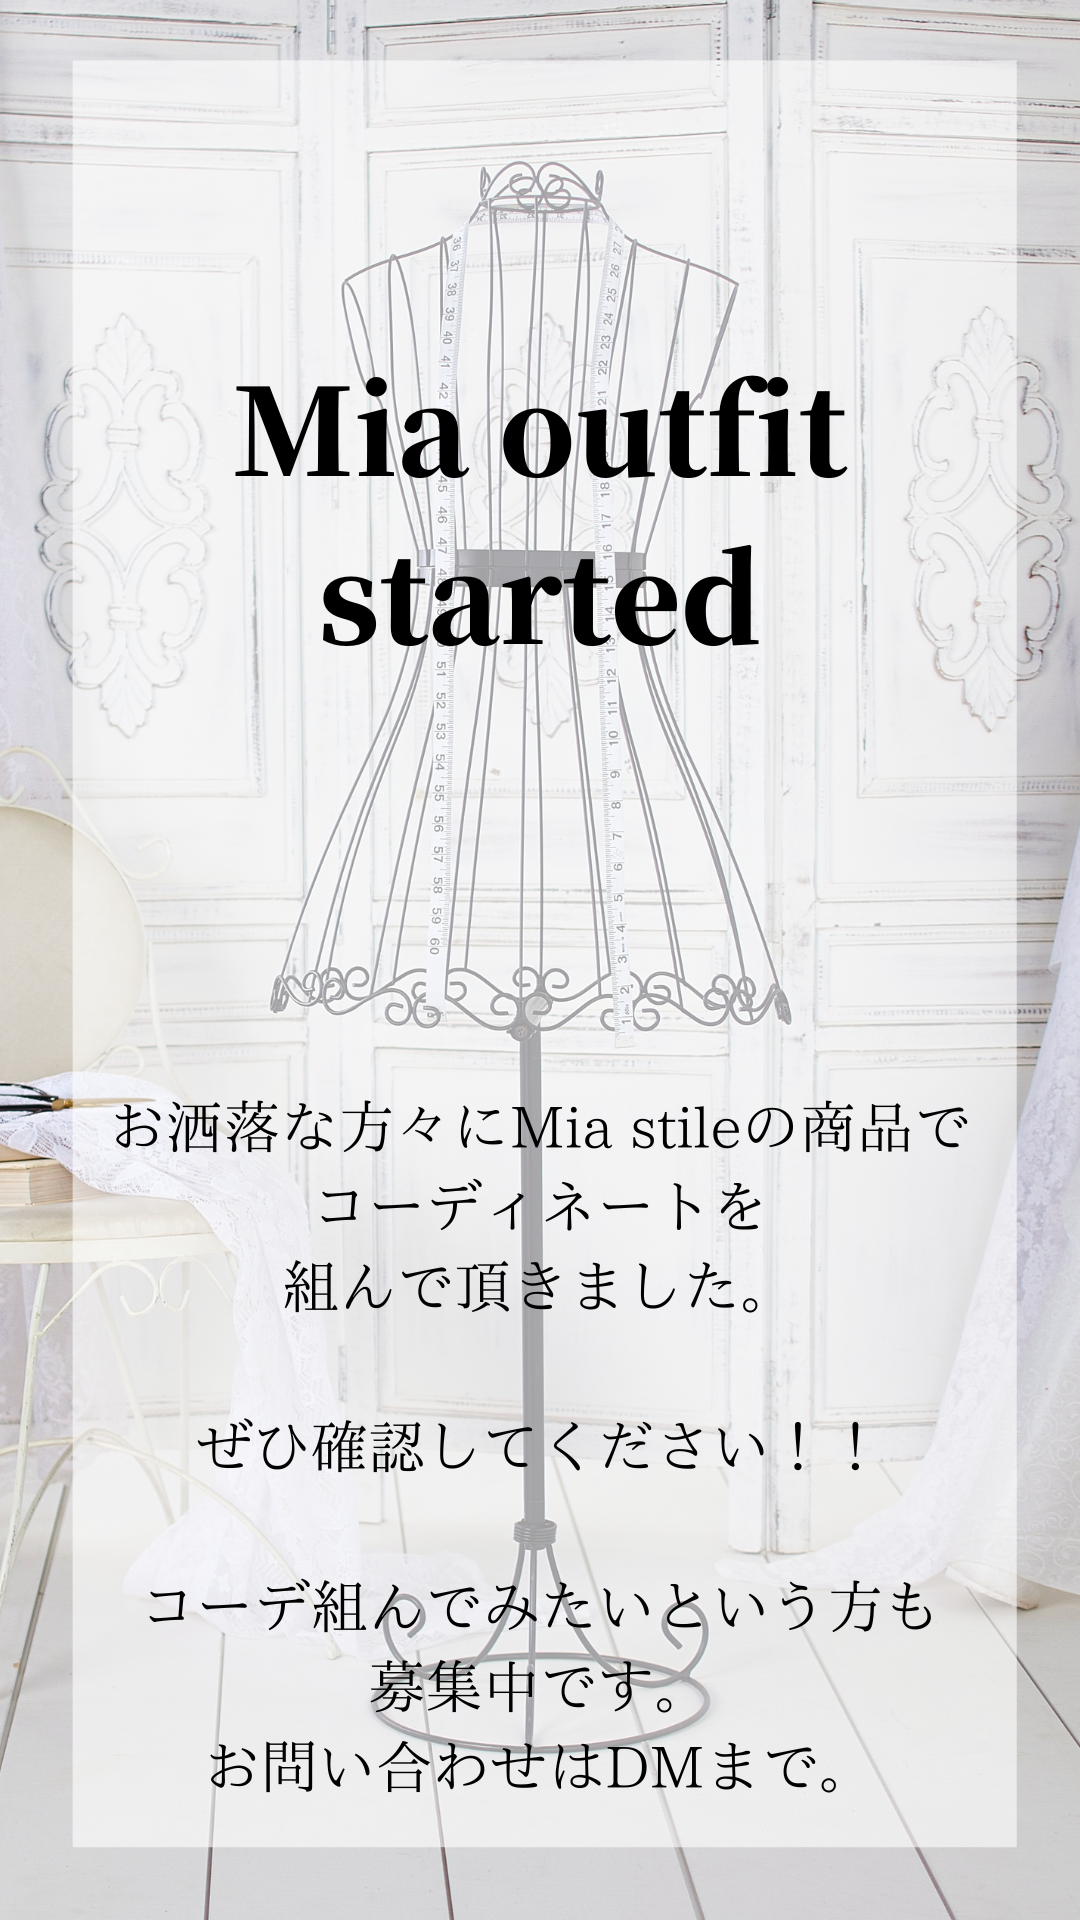 Mia outfitキャンペーン（コーディネートを組んでクーポンをGET!!）